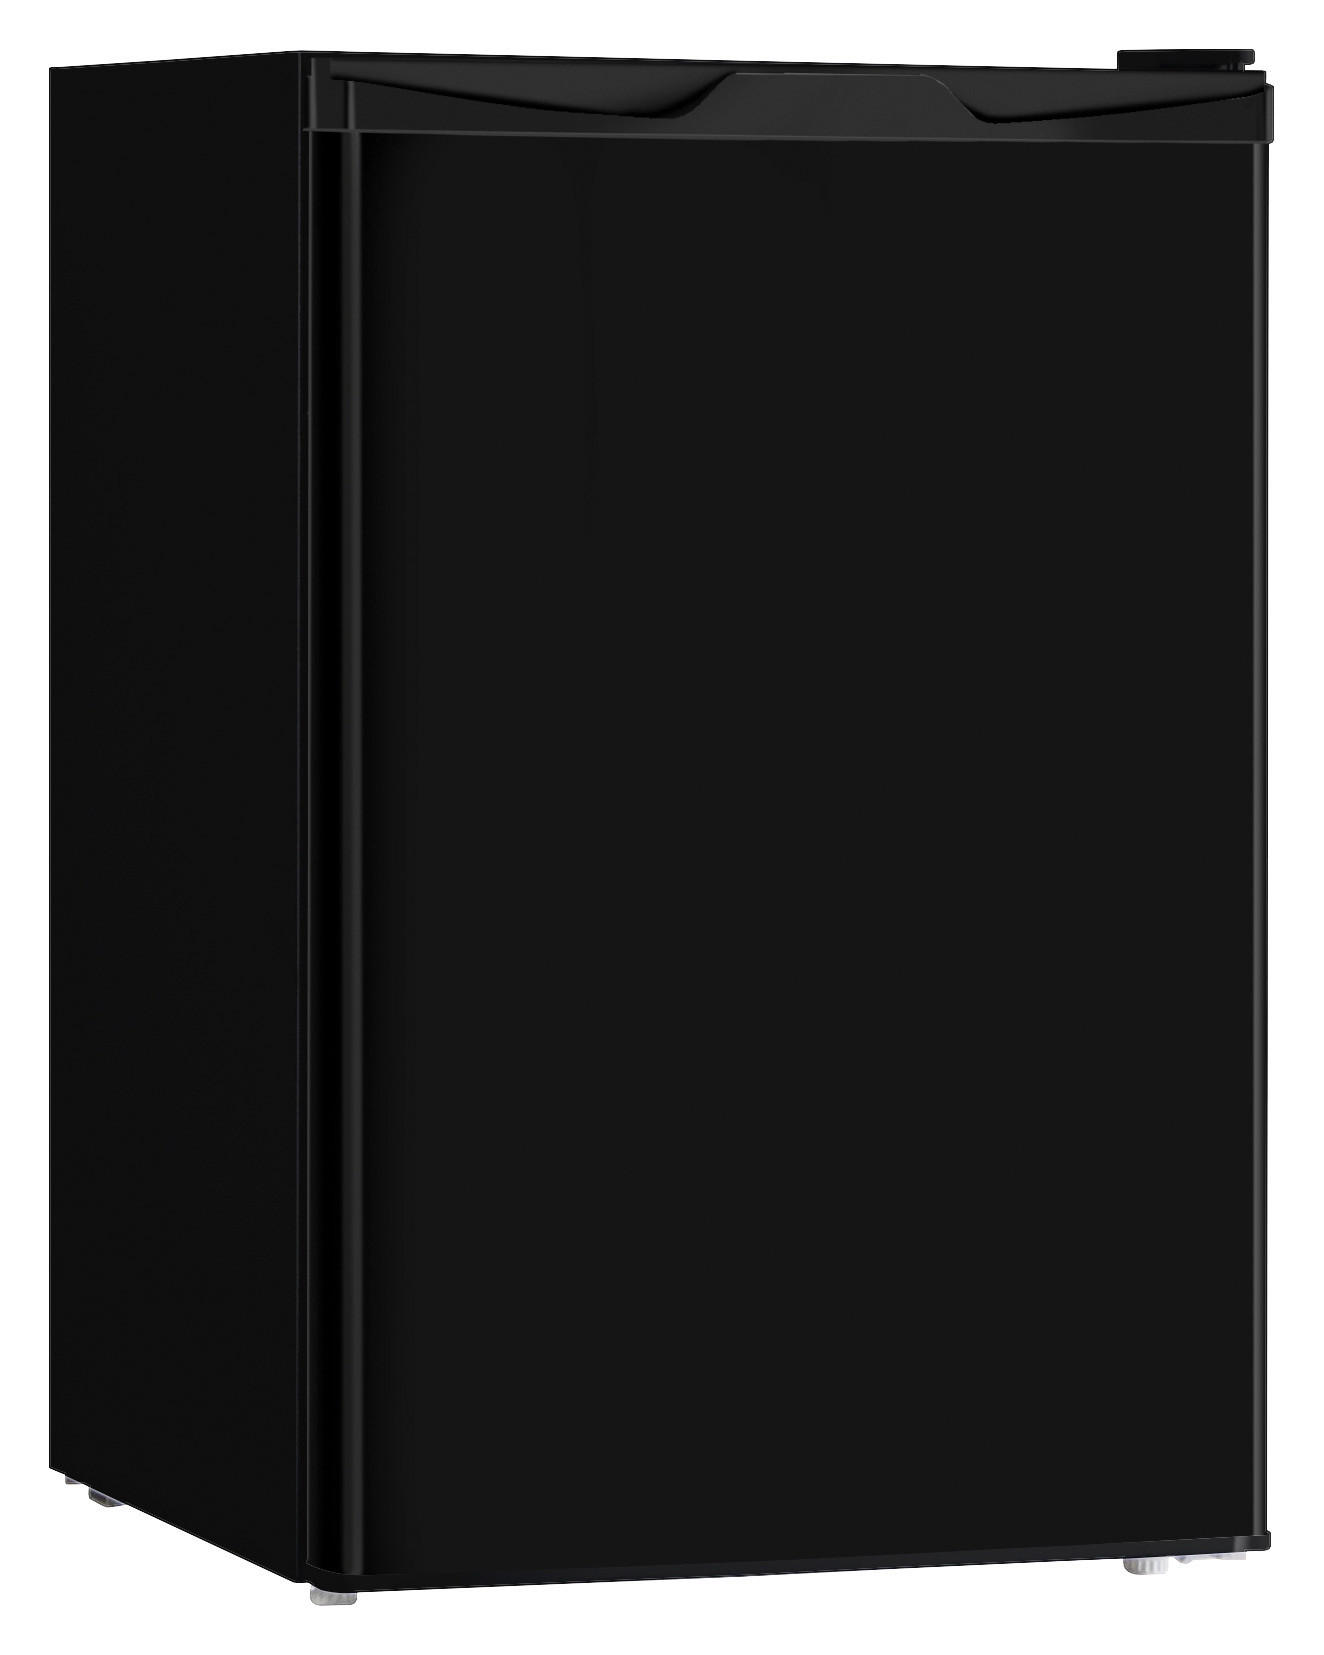 POCOline Stand-Kühlschrank KS 83-85 S schwarz B/H/T: ca. 45x83x46 cm